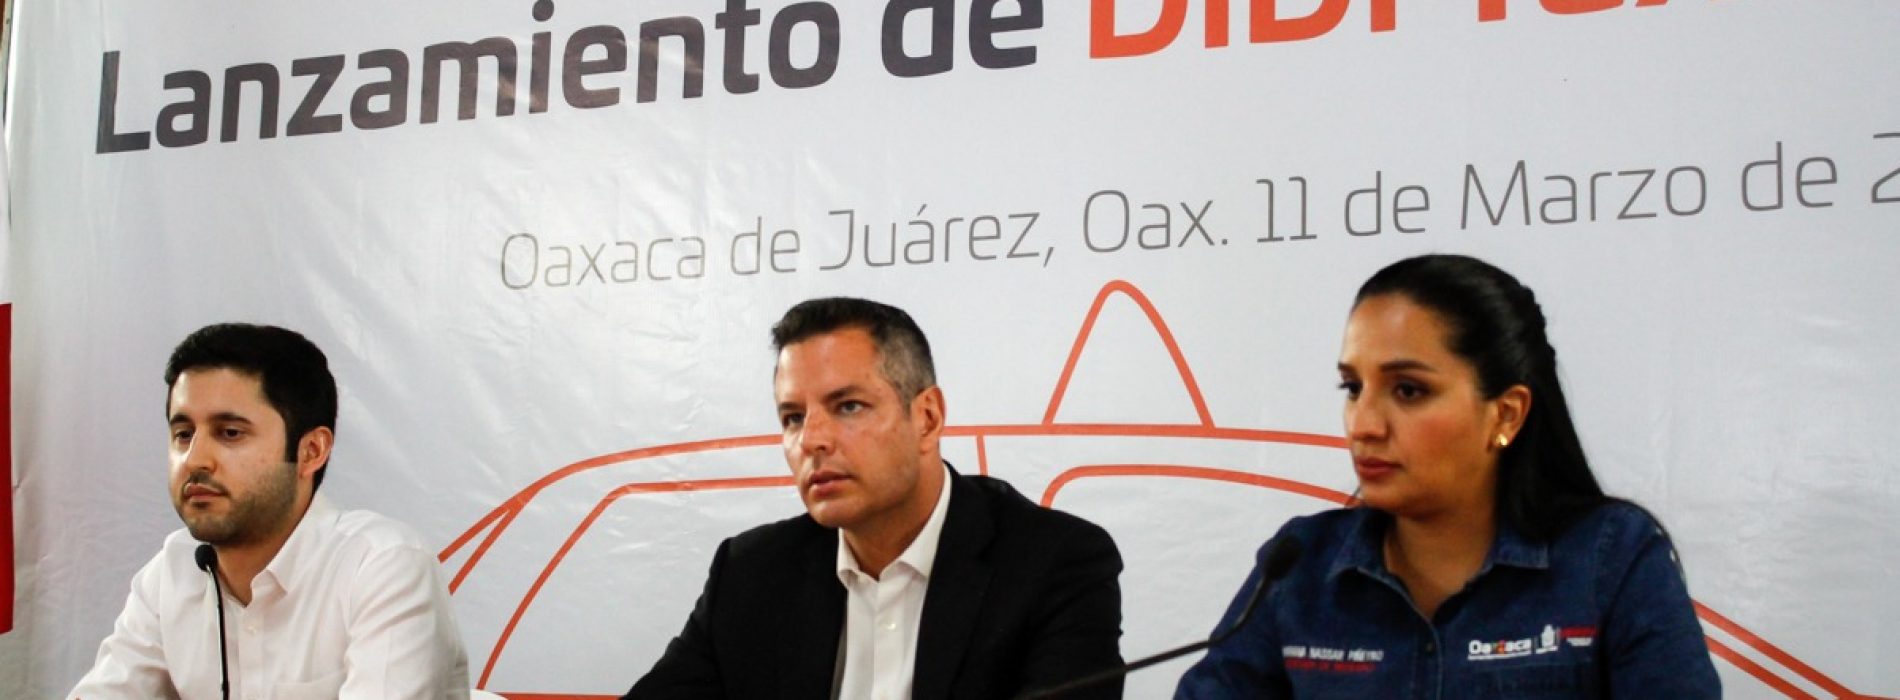 Oaxaca a la vanguardia en servicios digitales con DiDi Taxi: AMH